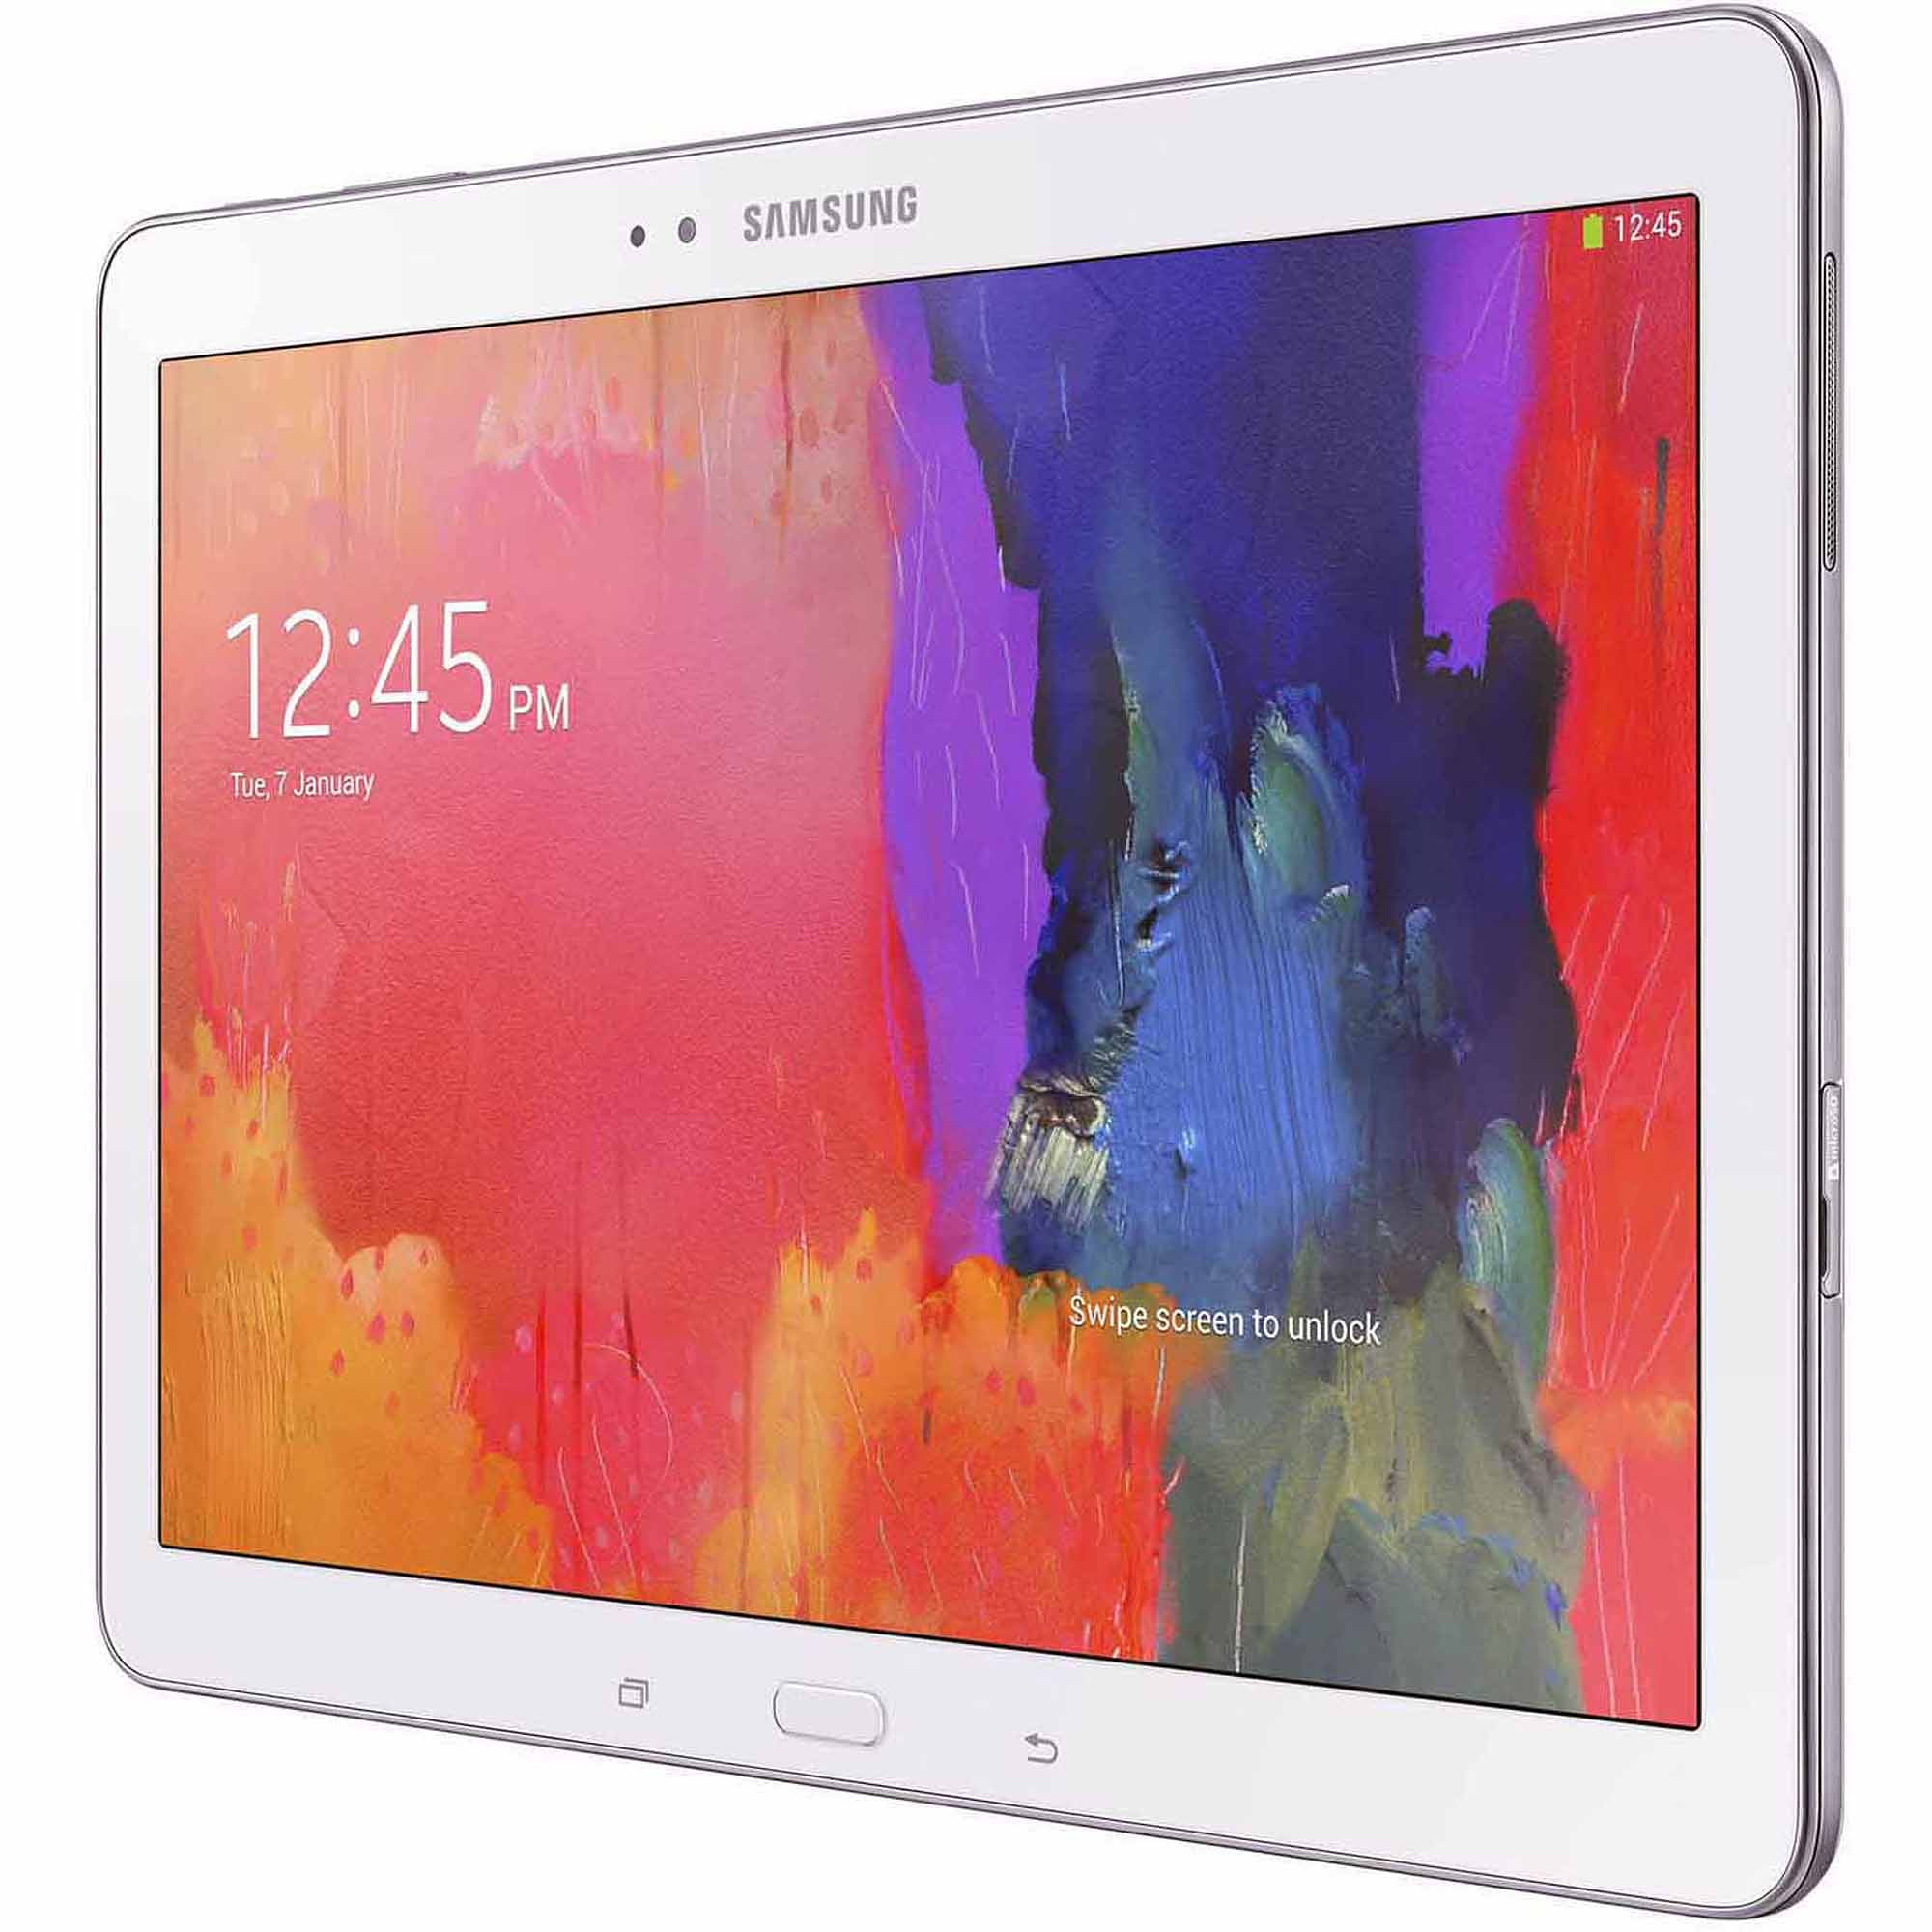 Galaxy note pro 12. Samsung SM-t525. Samsung Galaxy Tab Pro 12.2. Samsung Galaxy Tab Pro SM t525. Galaxy Tab Pro 10.1 SM-t525.